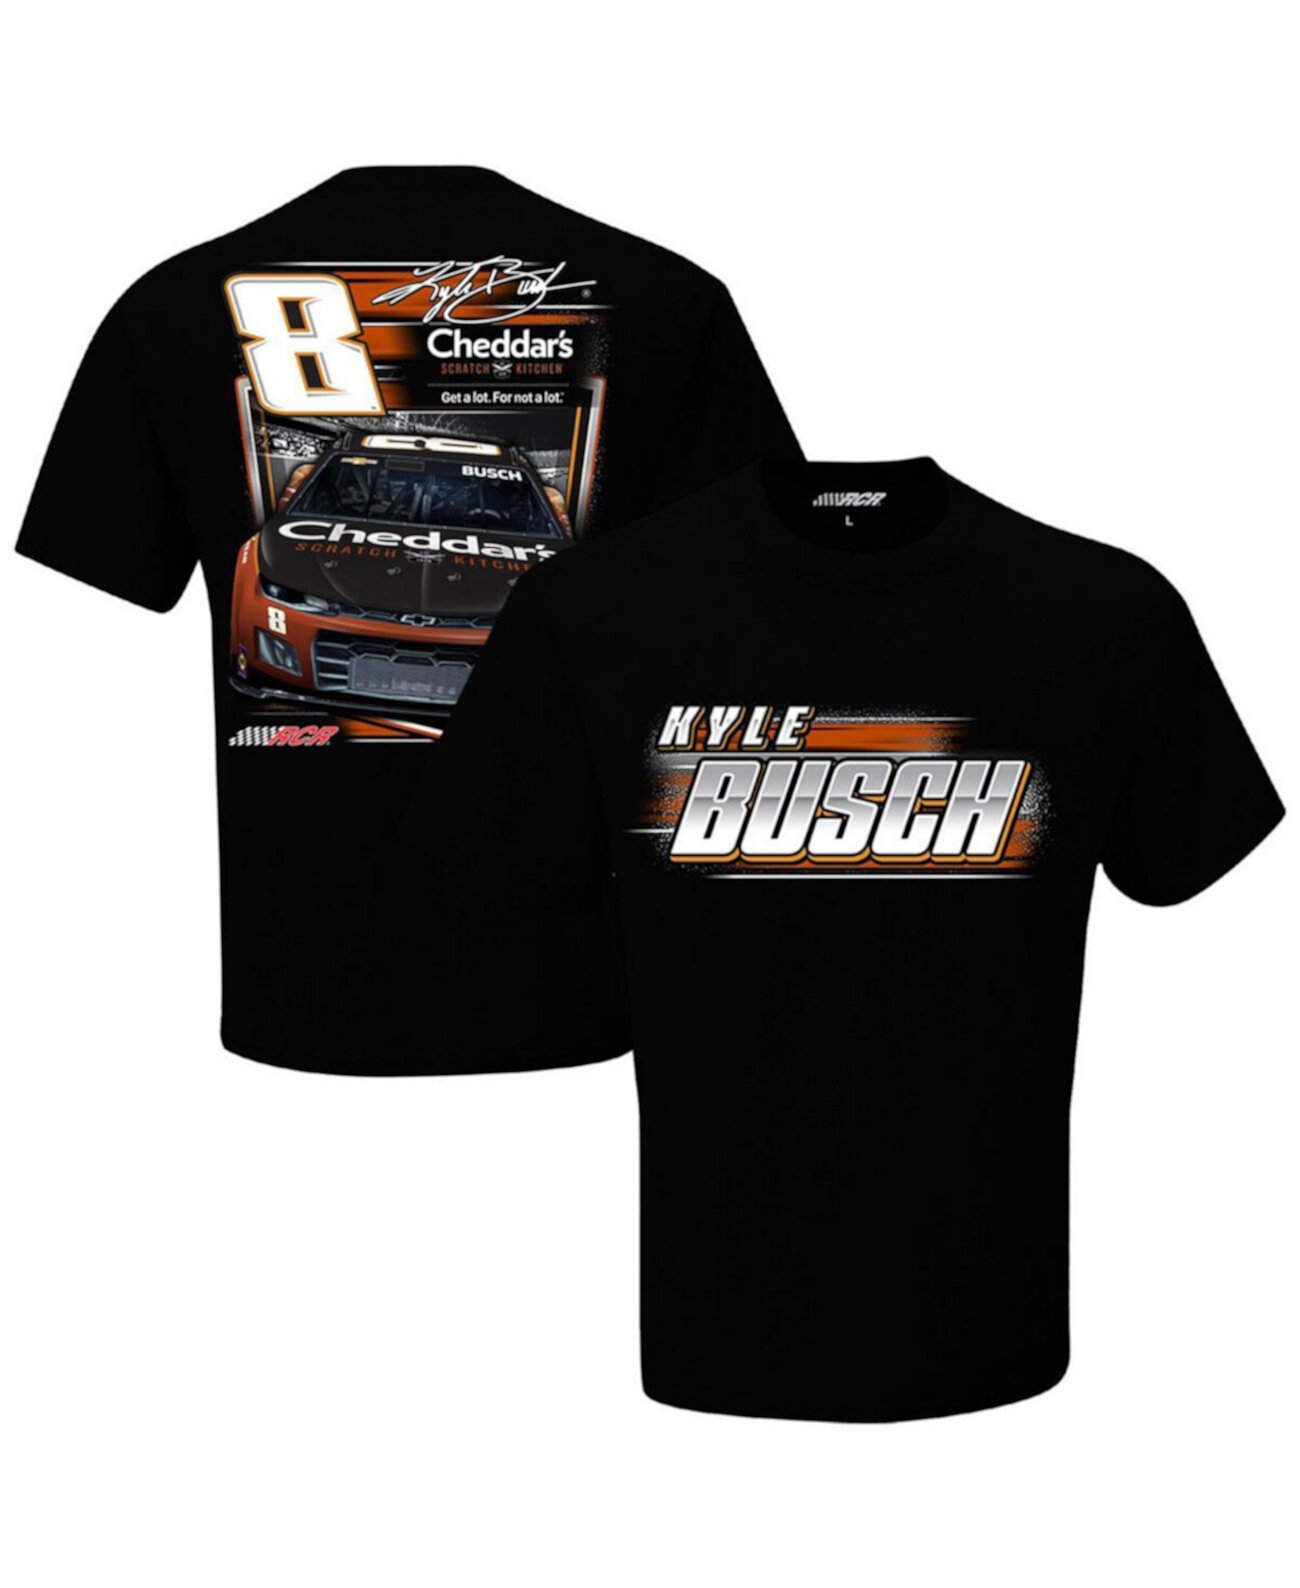 Мужская черная футболка Kyle Busch Cheddar's Dominator Richard Childress Racing Team Collection